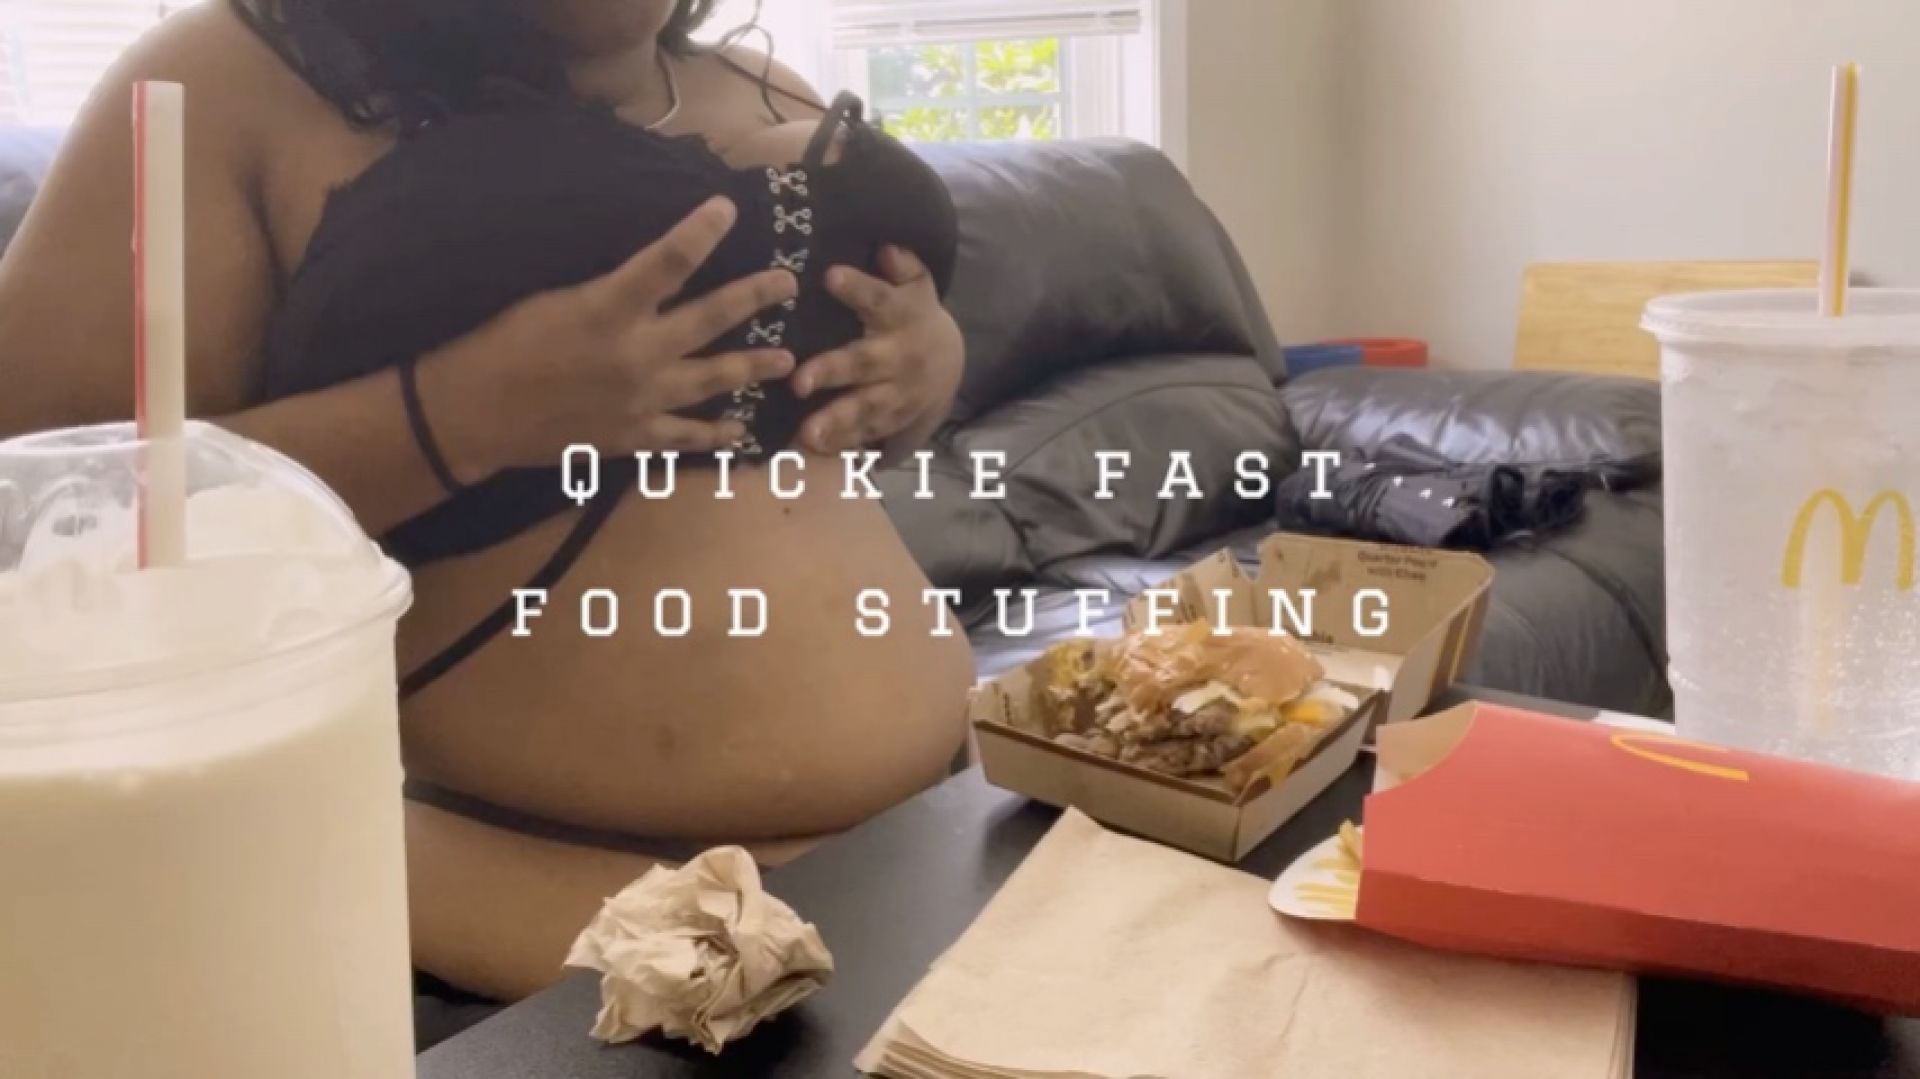 Quicky Fast Food Stuffing / Femdom Feedee